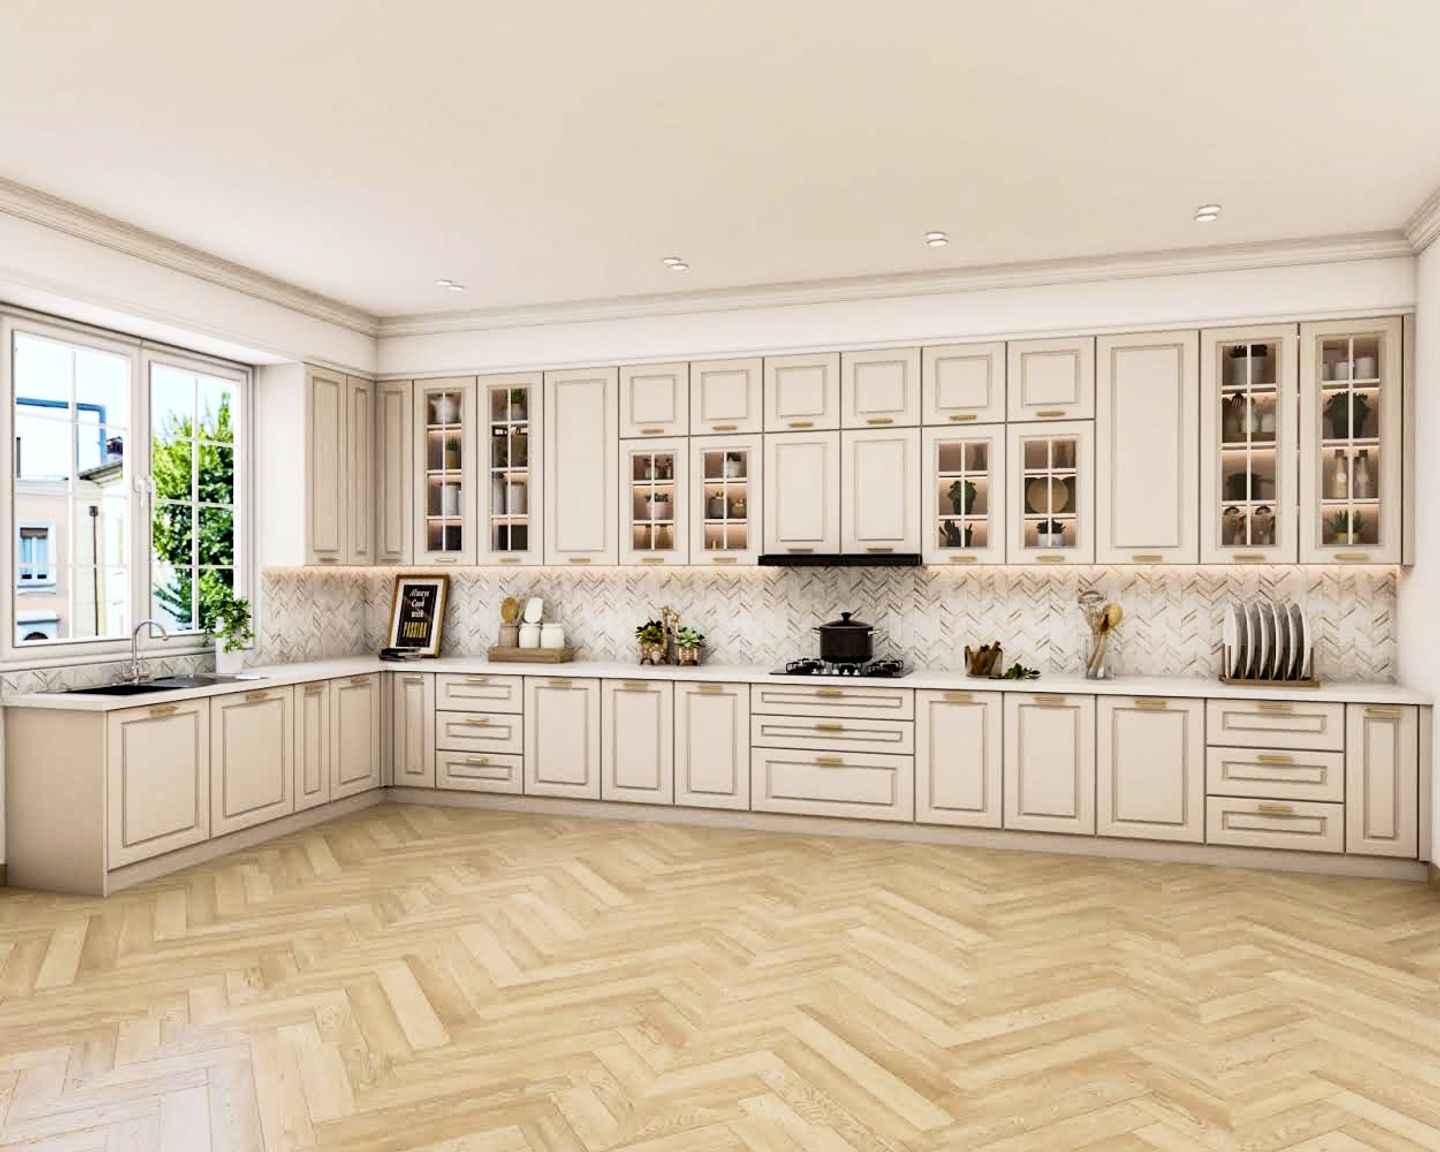 20x16 Ft  L-Shaped Modular Kitchen Design With Montone Cabinets And Herringbone Backsplash - Livspace